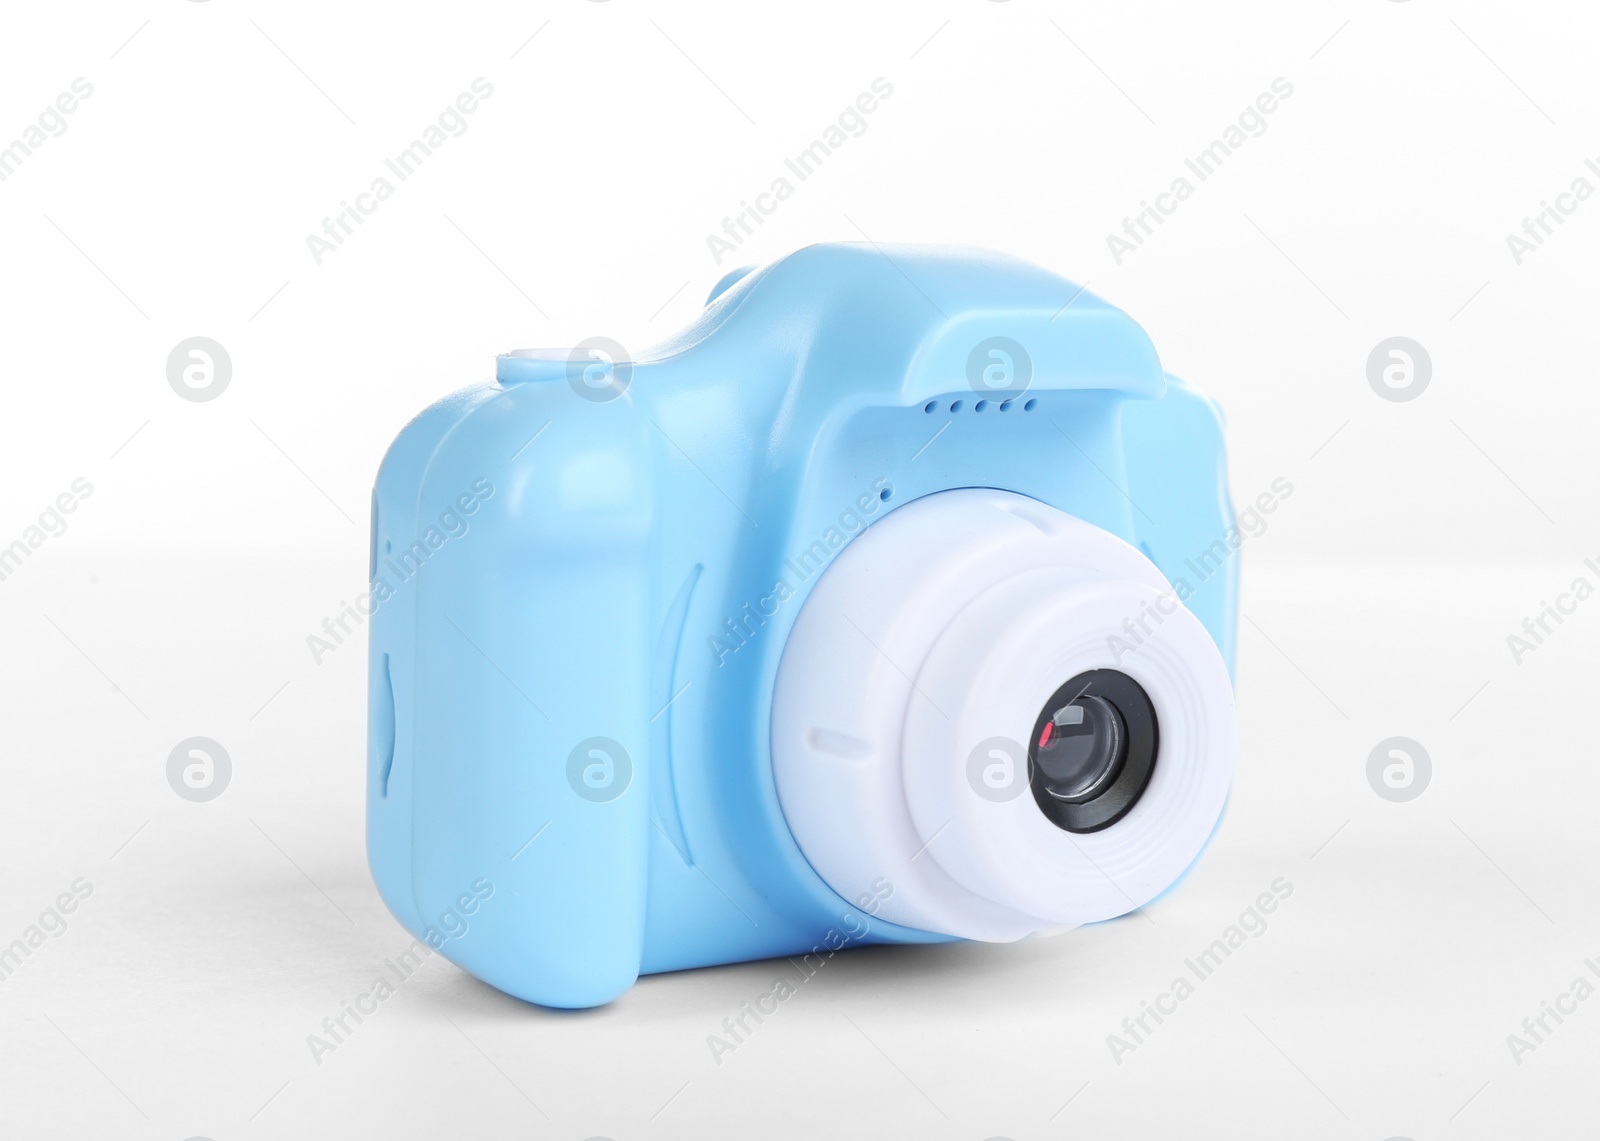 Photo of Light blue toy camera isolated on white